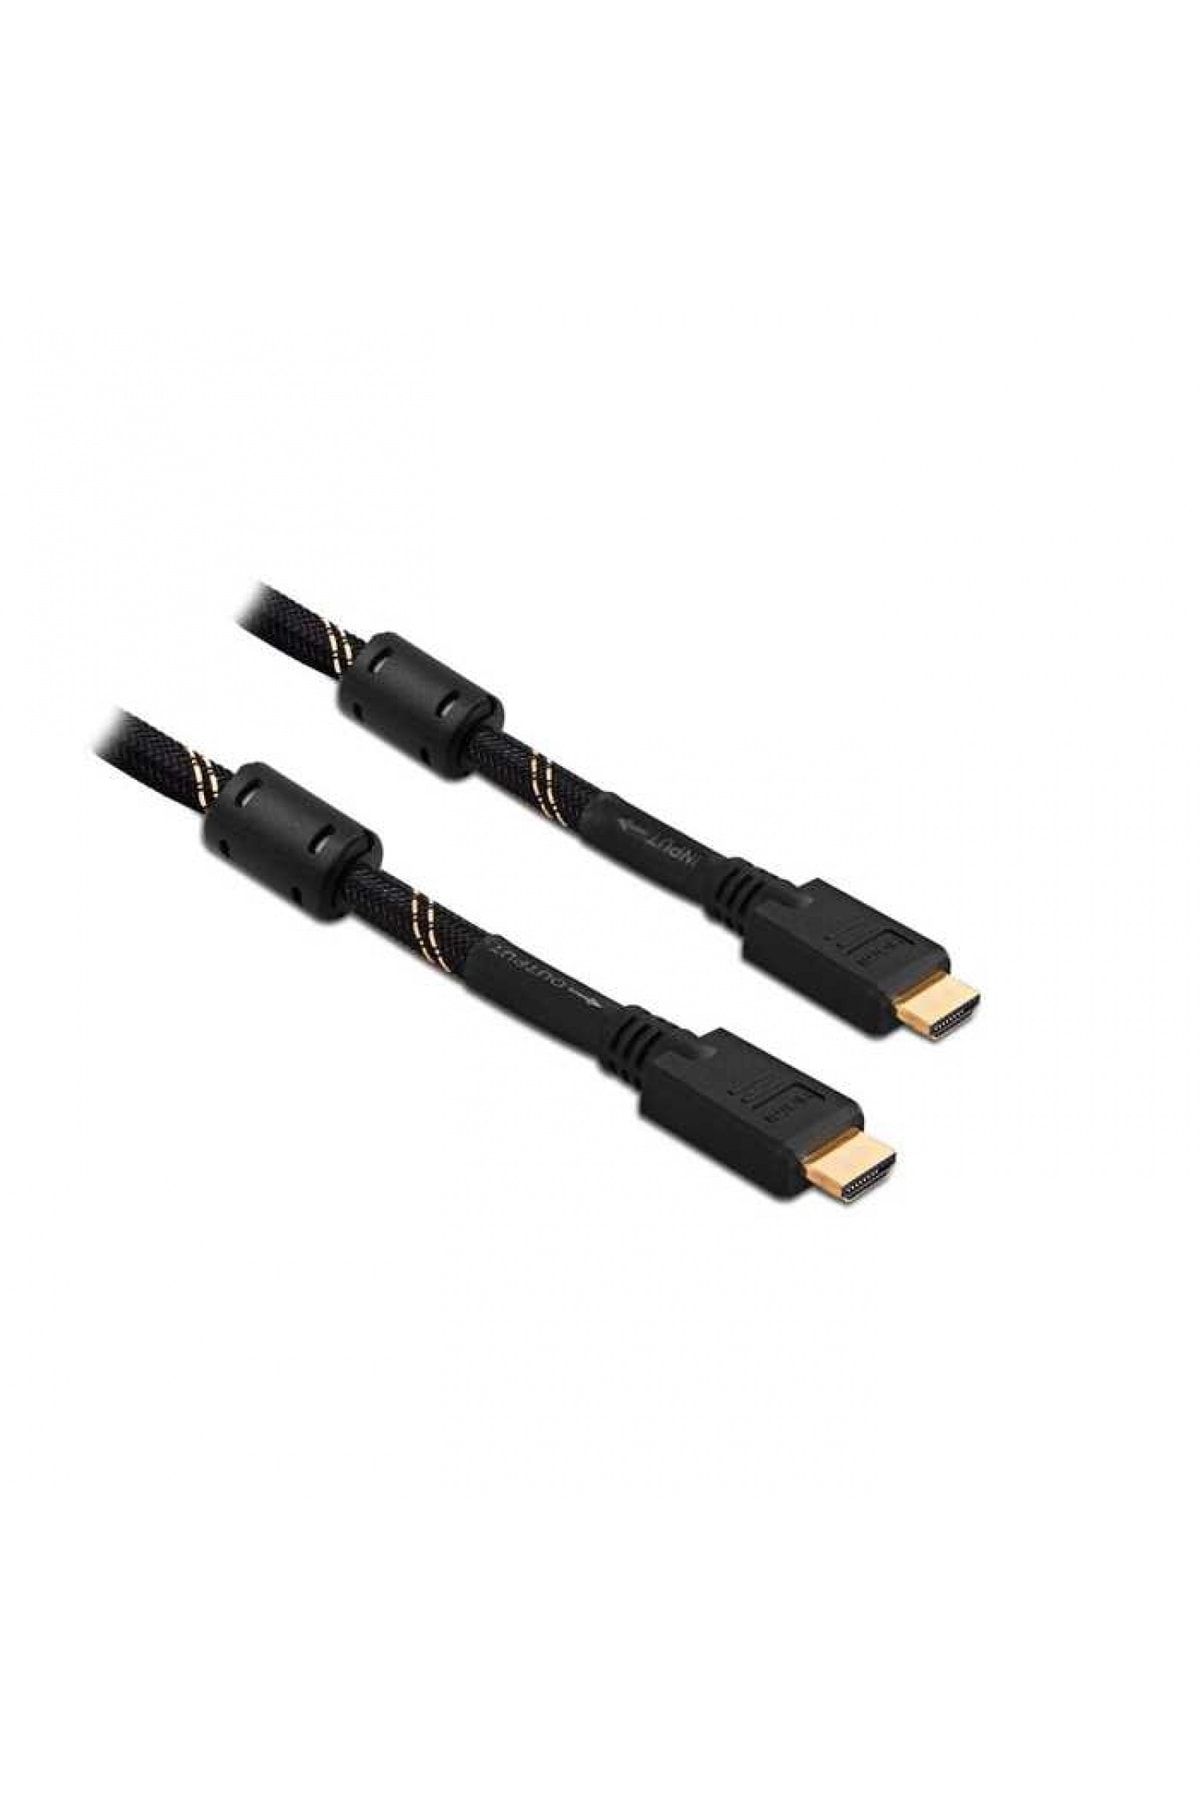 S-Link S-link SLX-2770 HDMI TO HDMI 70m Çift Filtre+Çipsetli+Kor.Kılıf 1.4 Ver. 3D Kablo